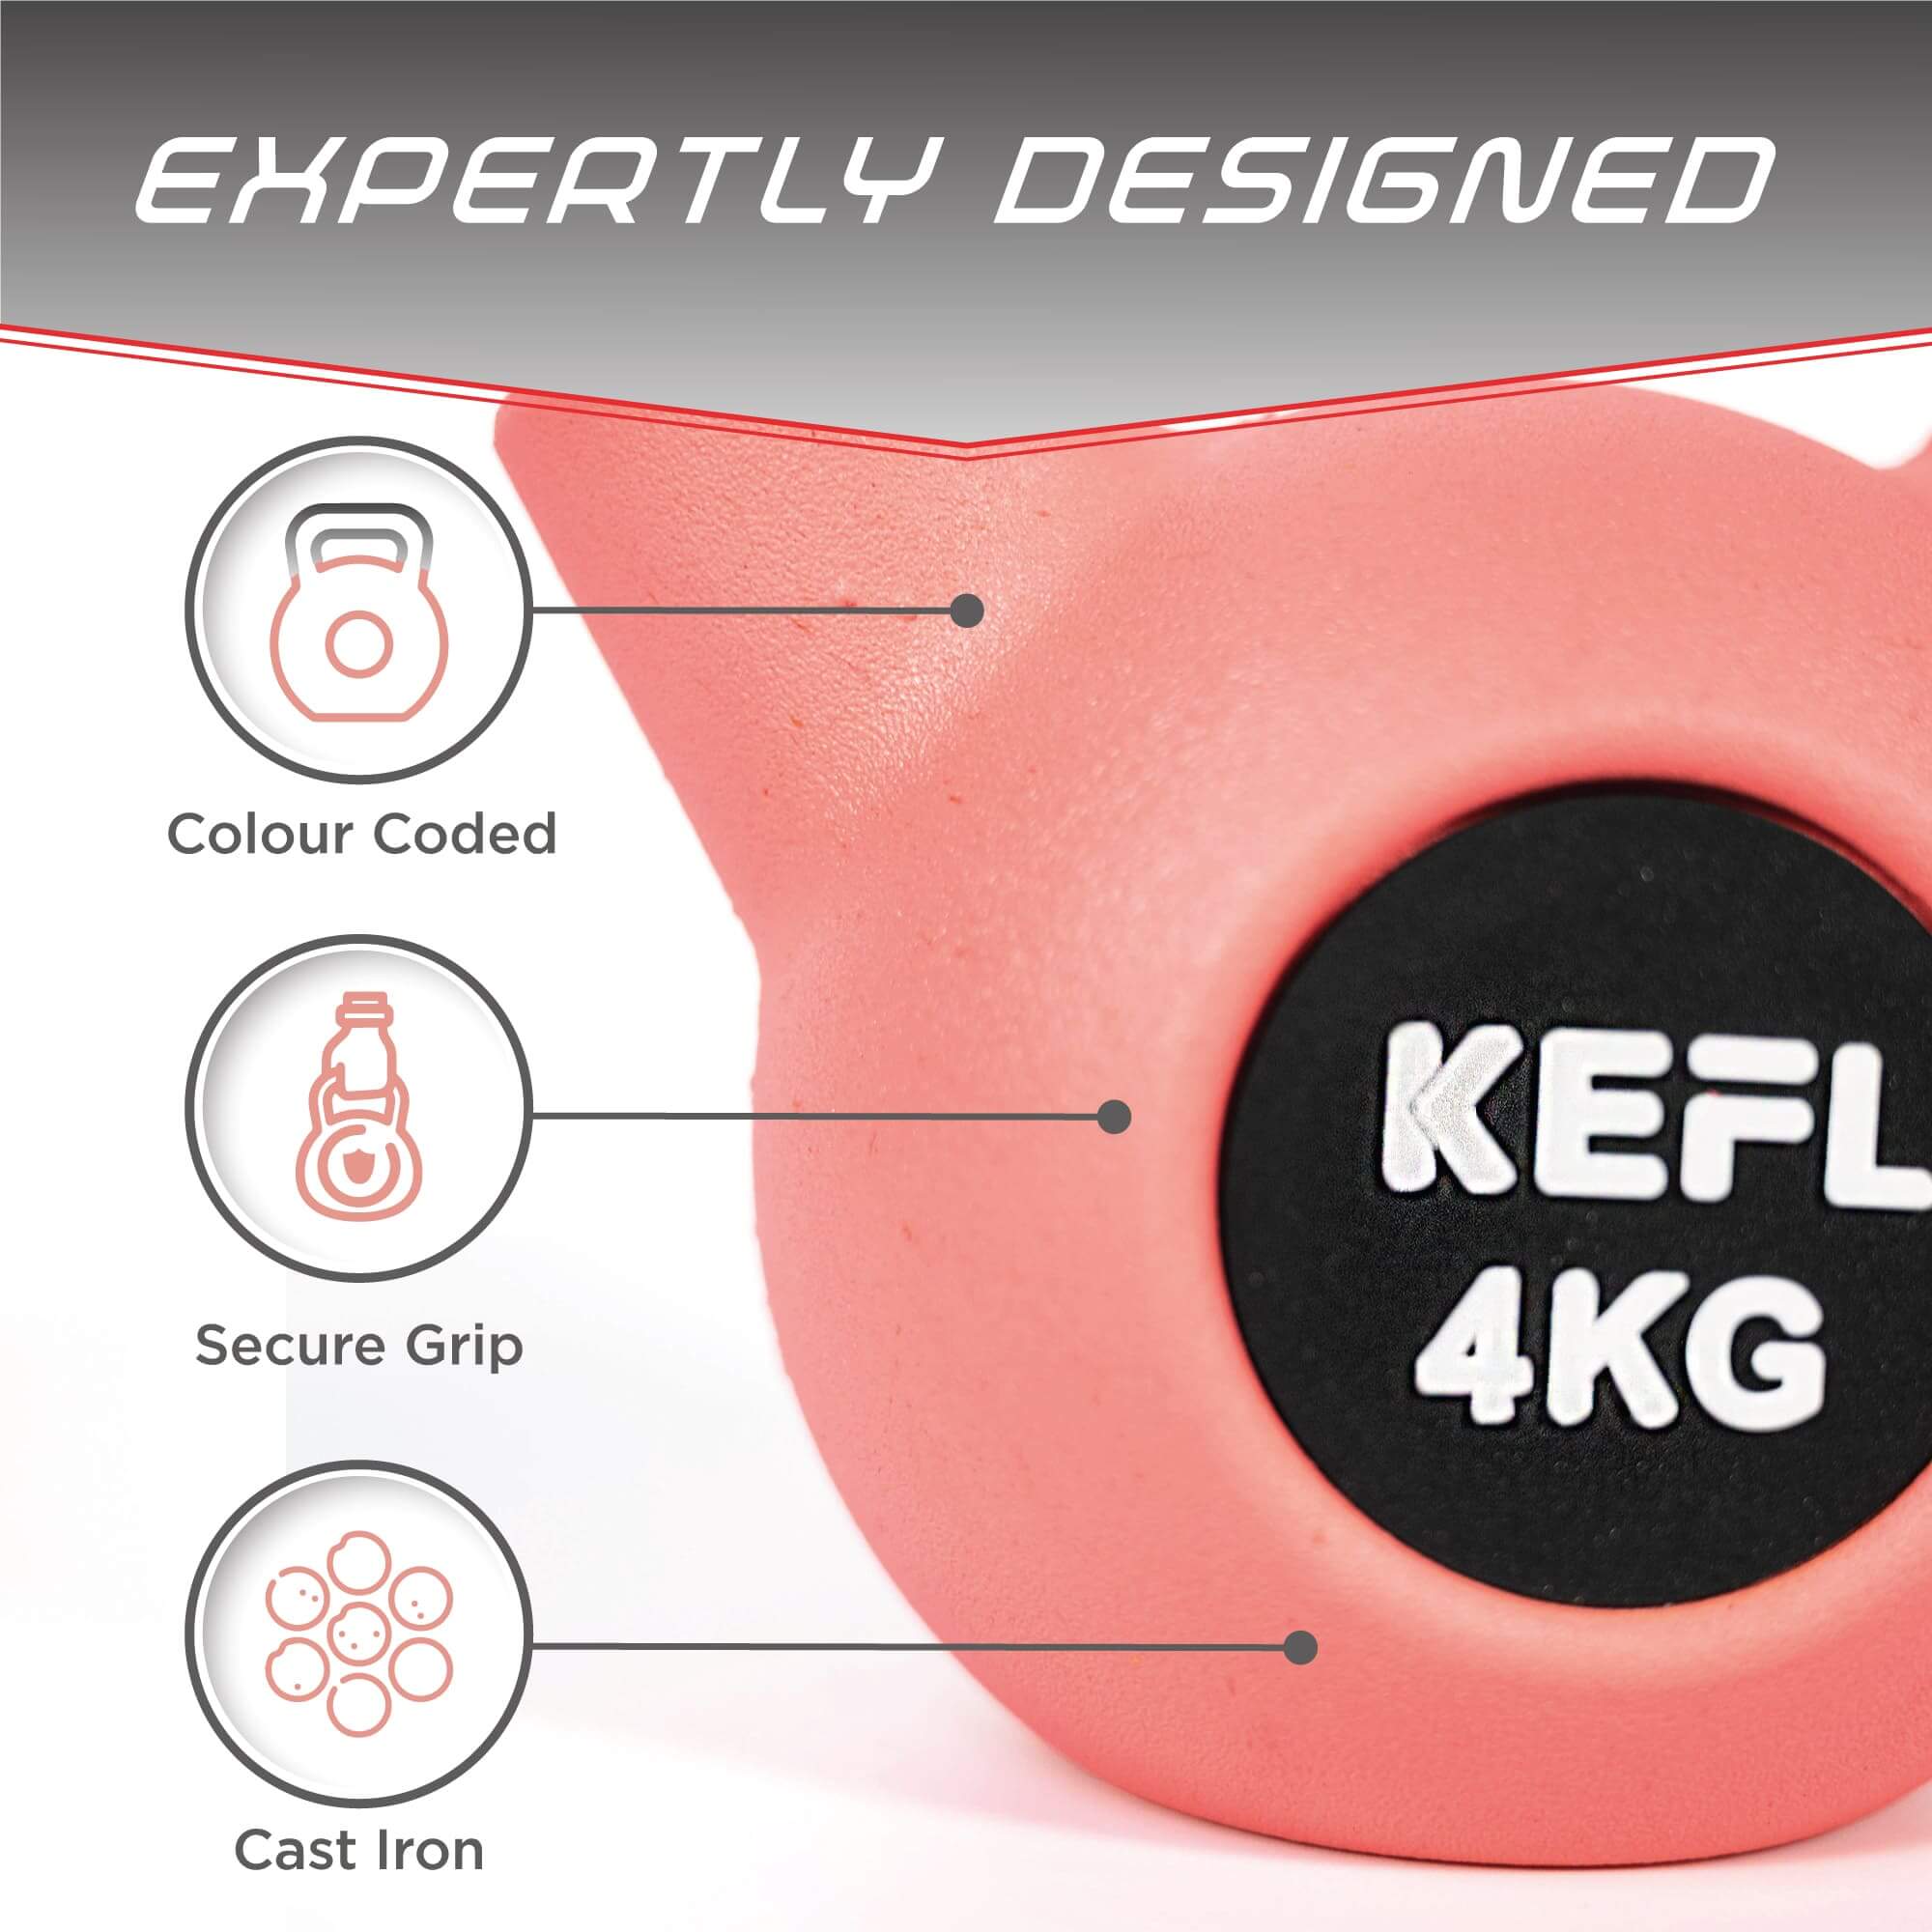 KEFL Rubber Coated Kettlebell with Chrome Handle - KEFLUK